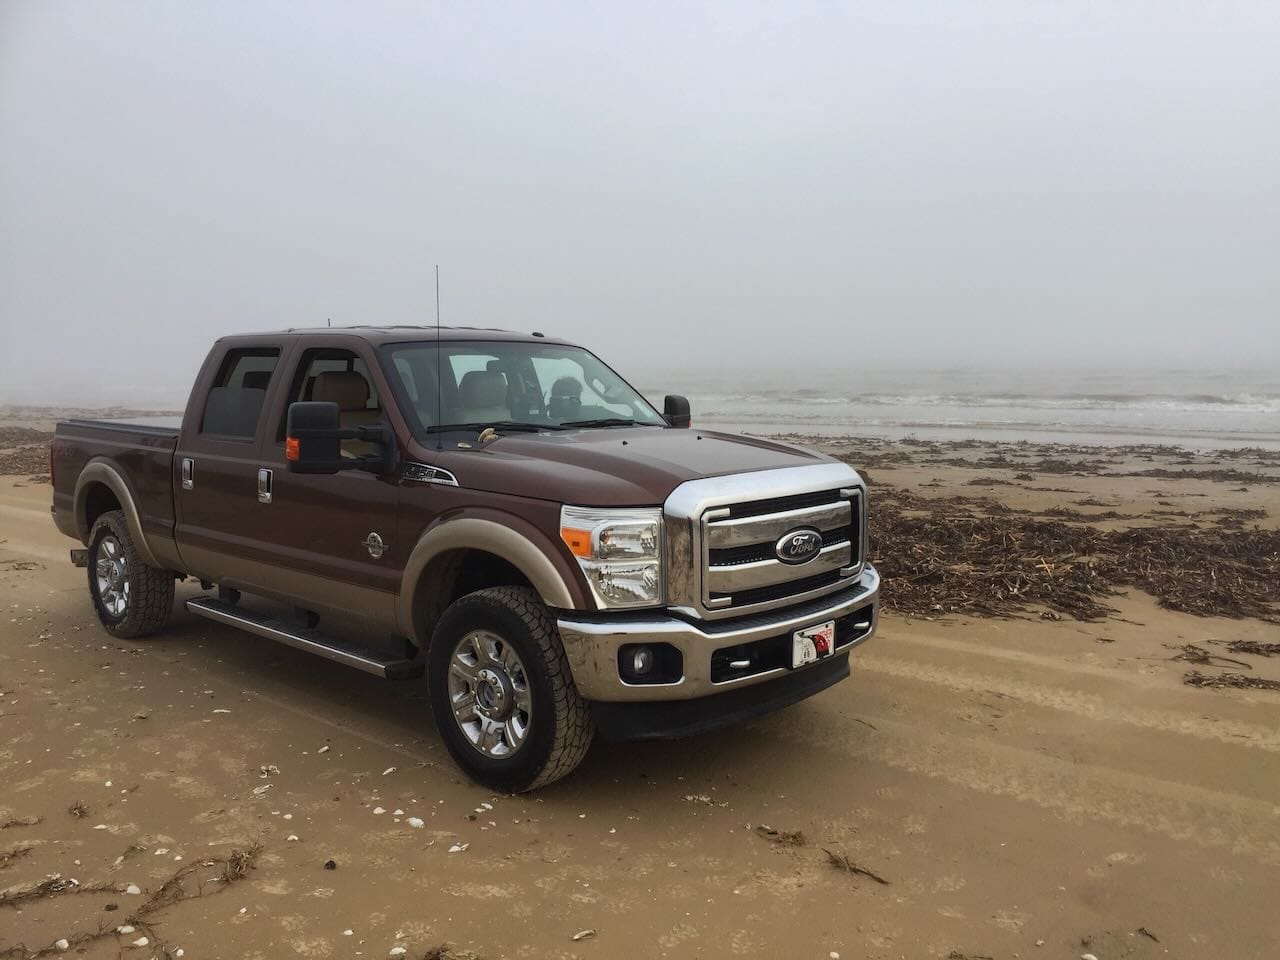 Color photo of a truck on a foggy beach.